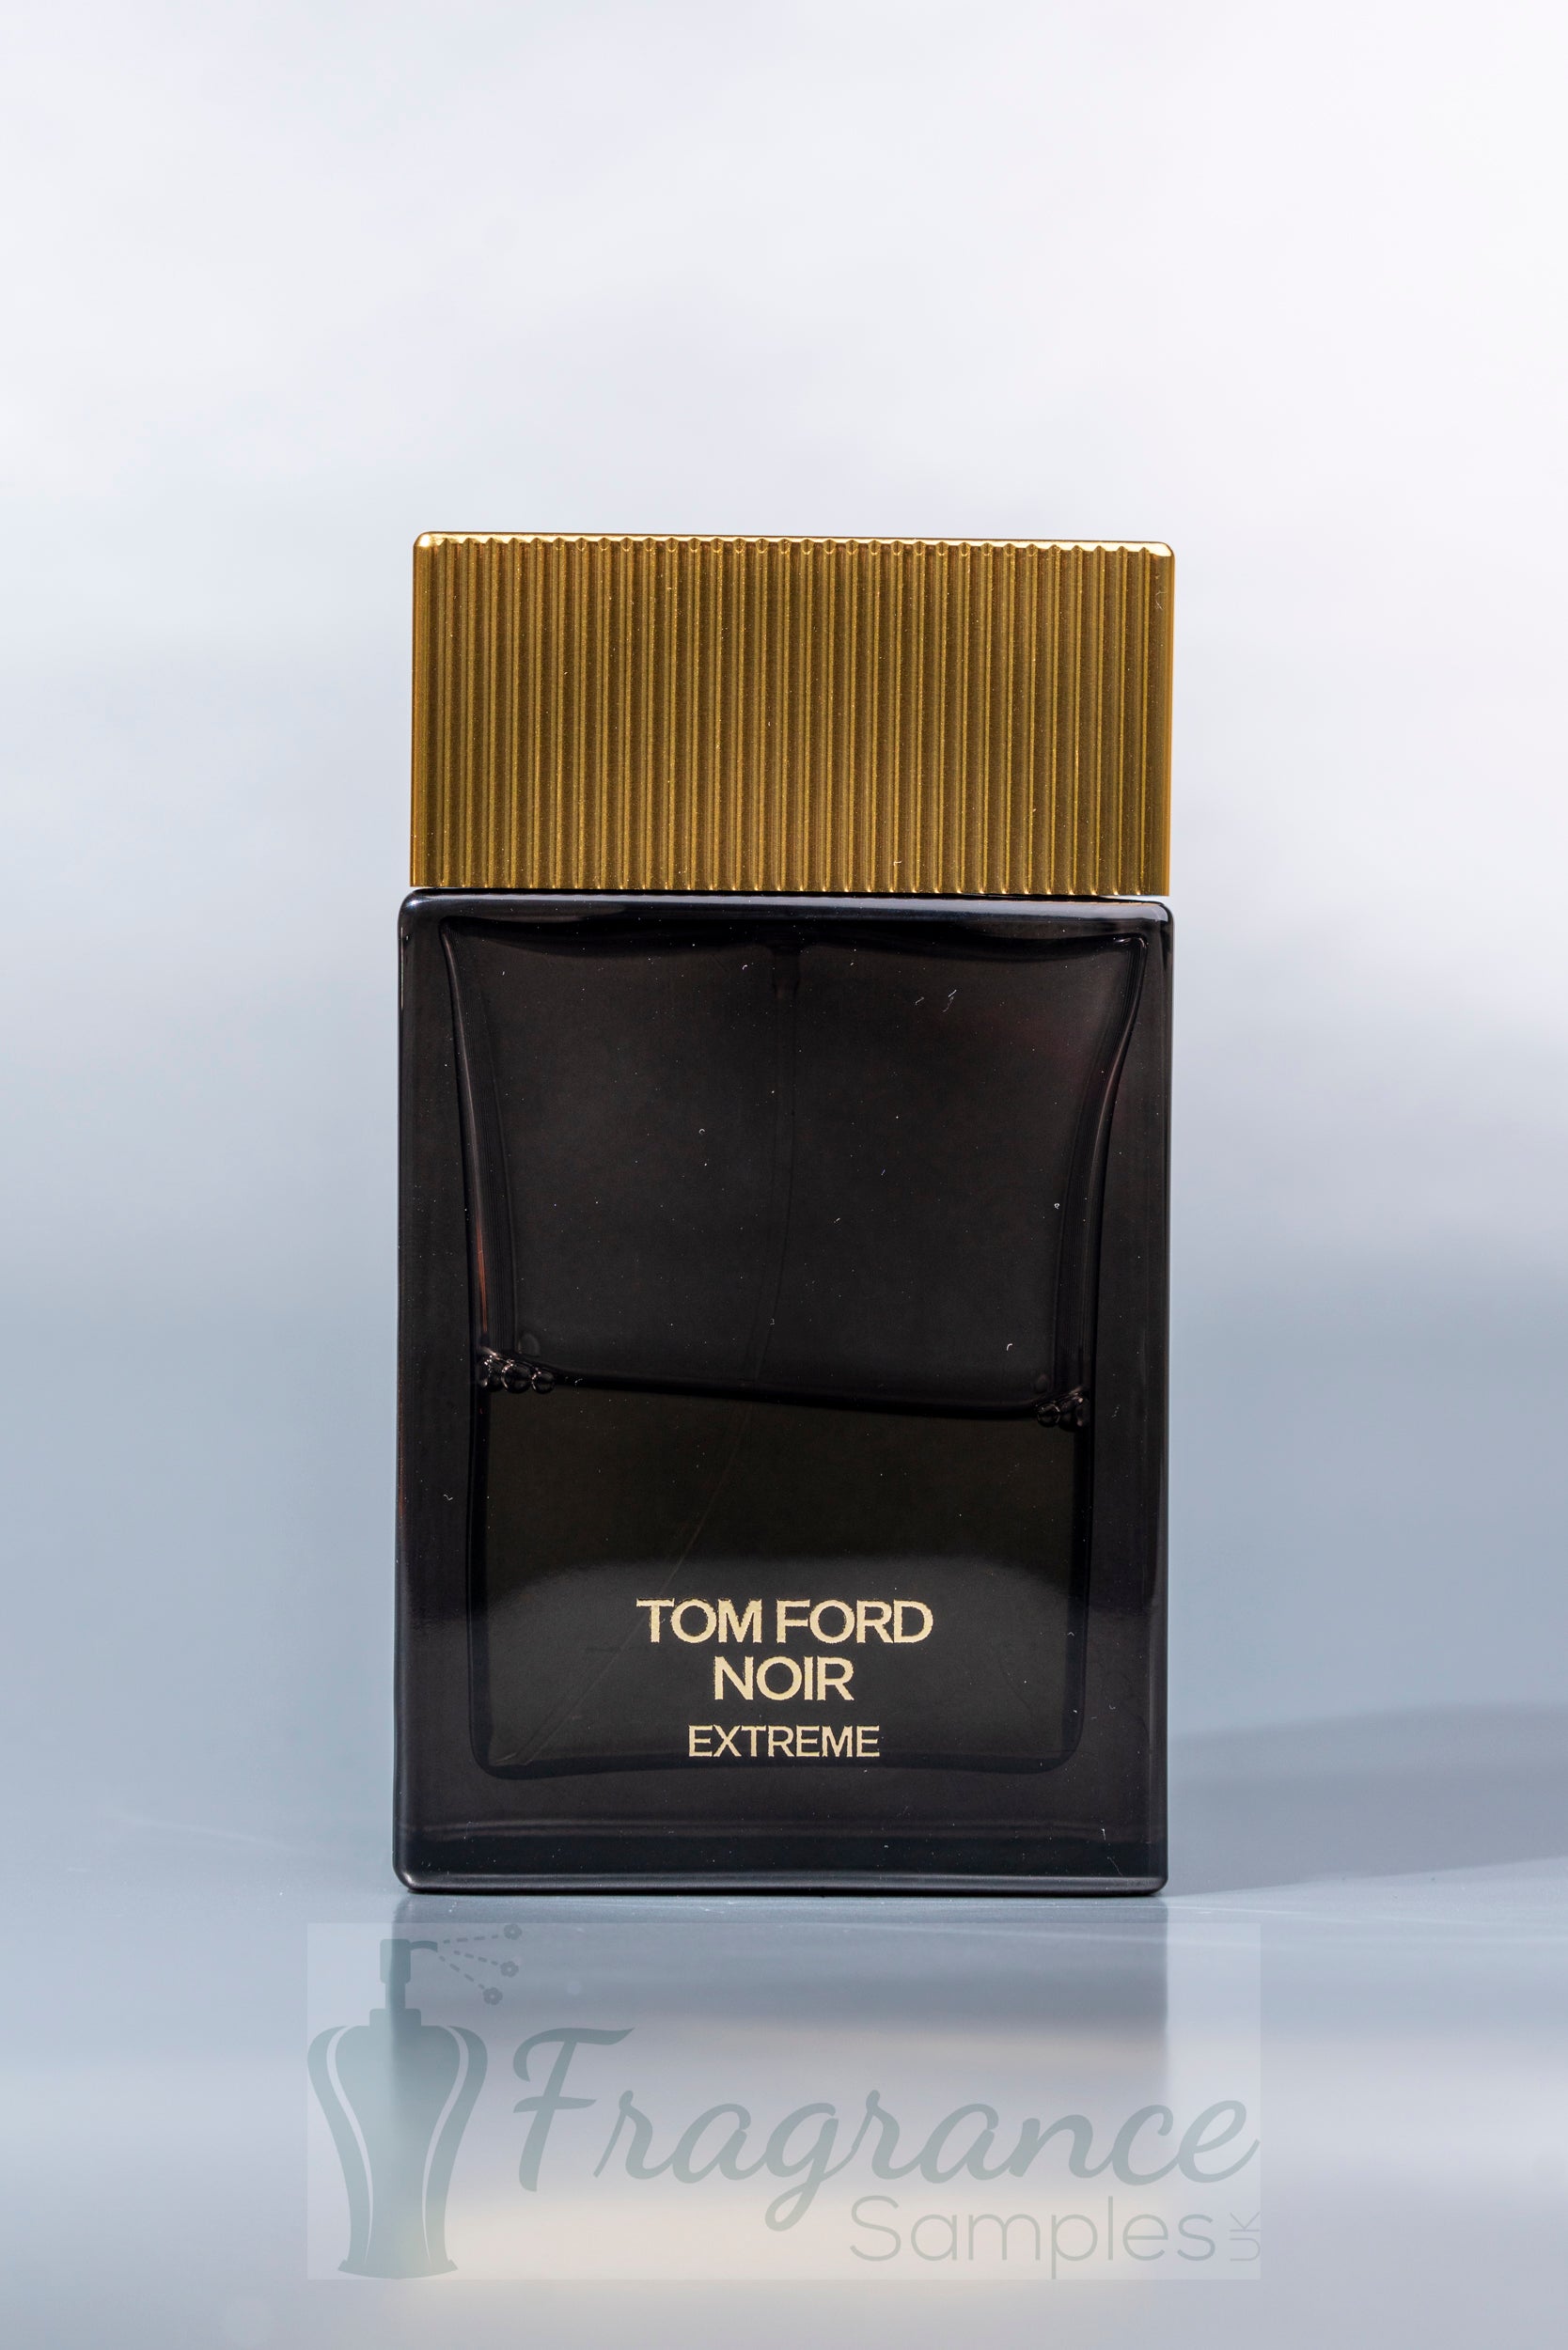 Tom Ford Noir Extreme – Fragrance Samples UK